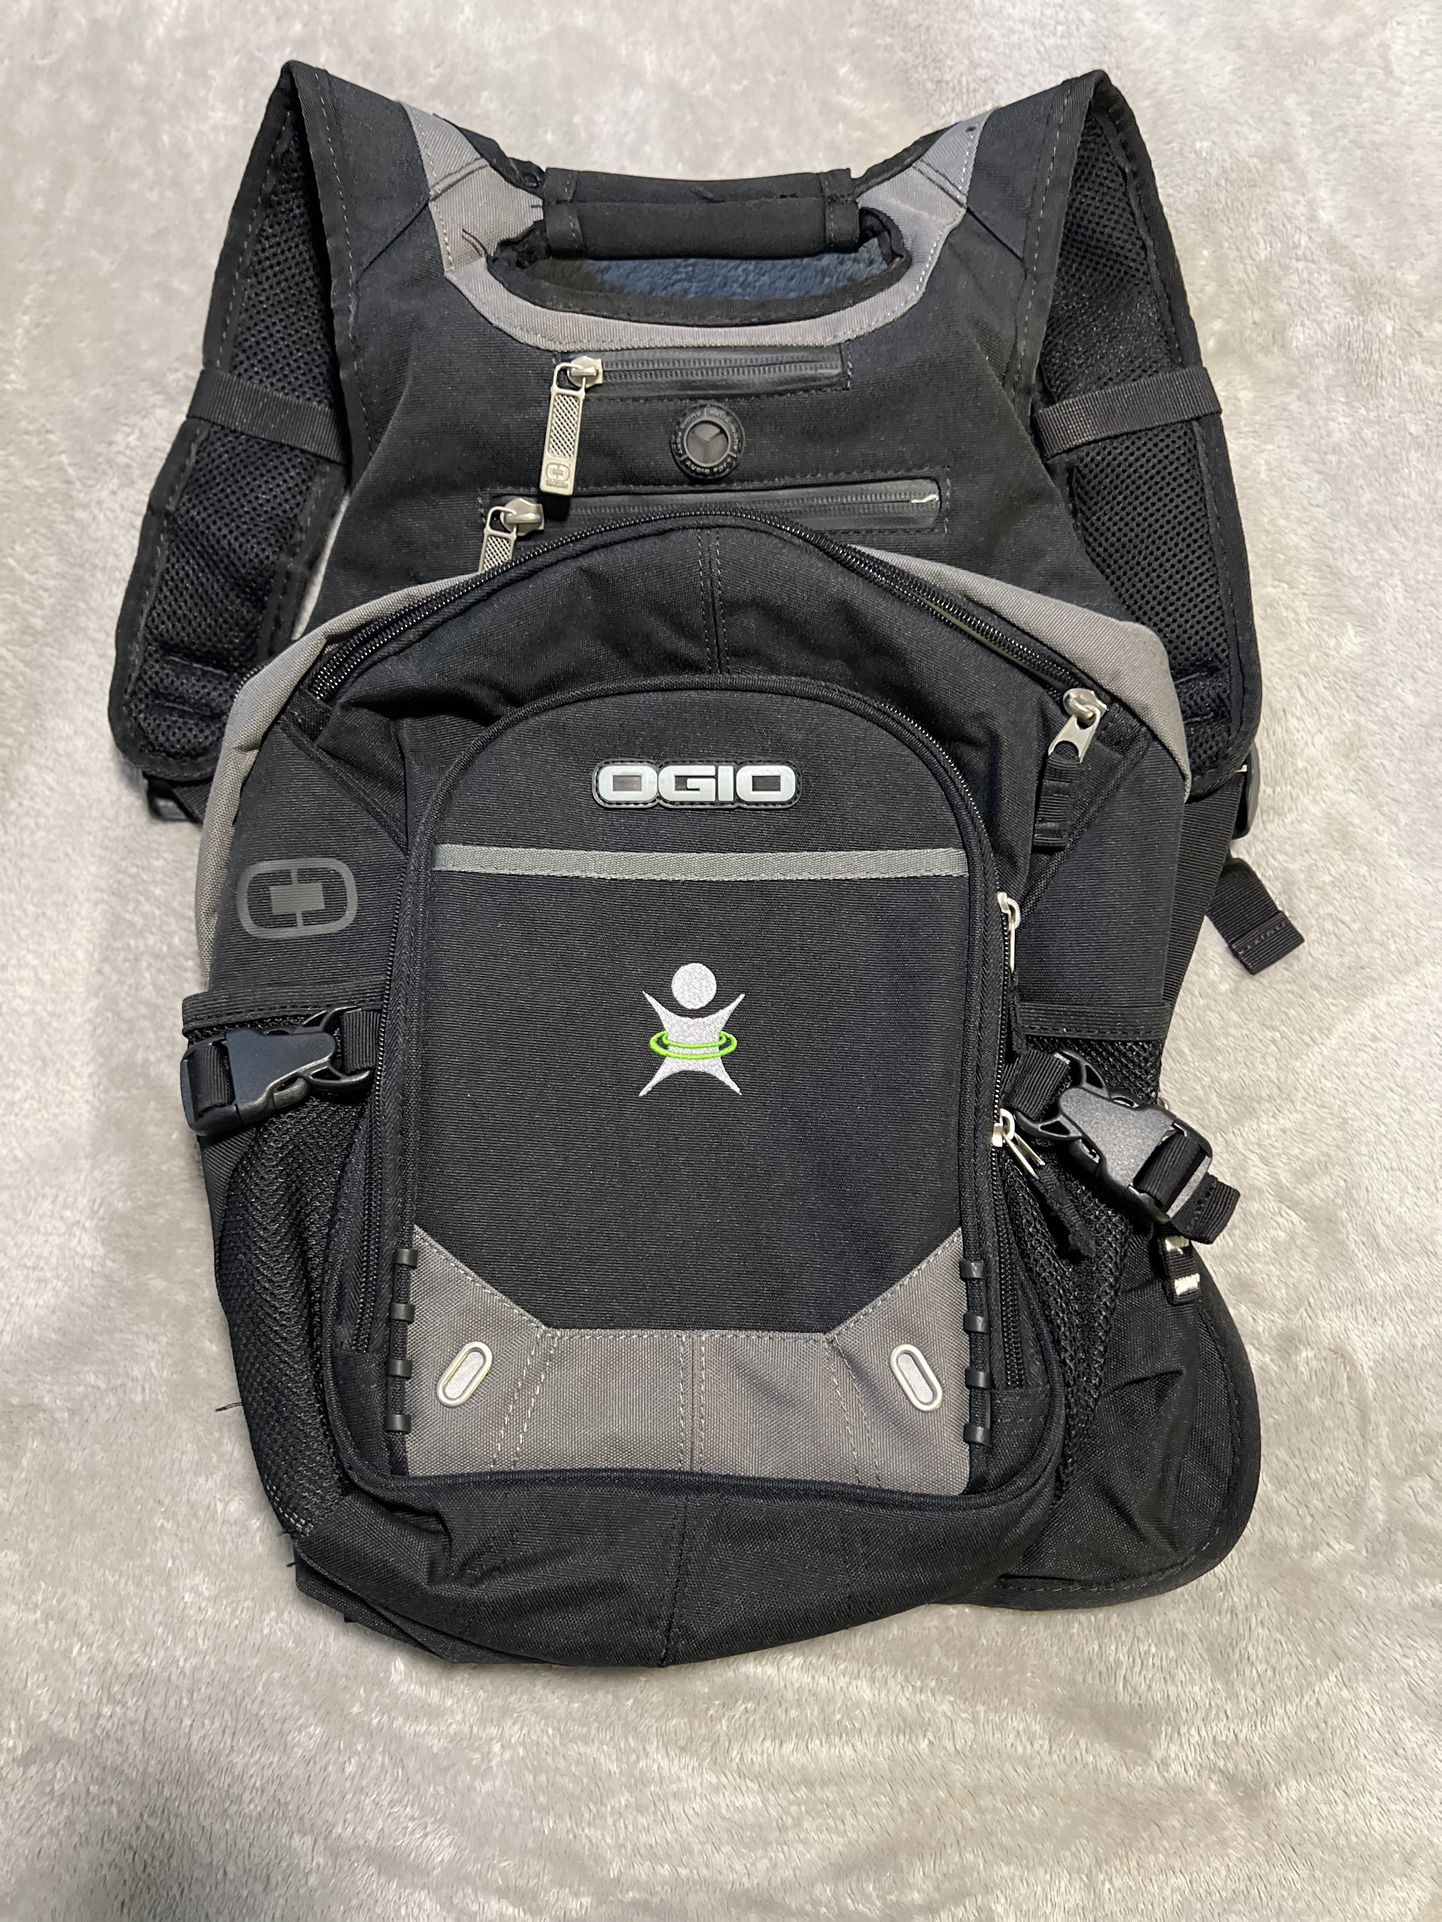 OGIO heavy duty laptop travel backpack